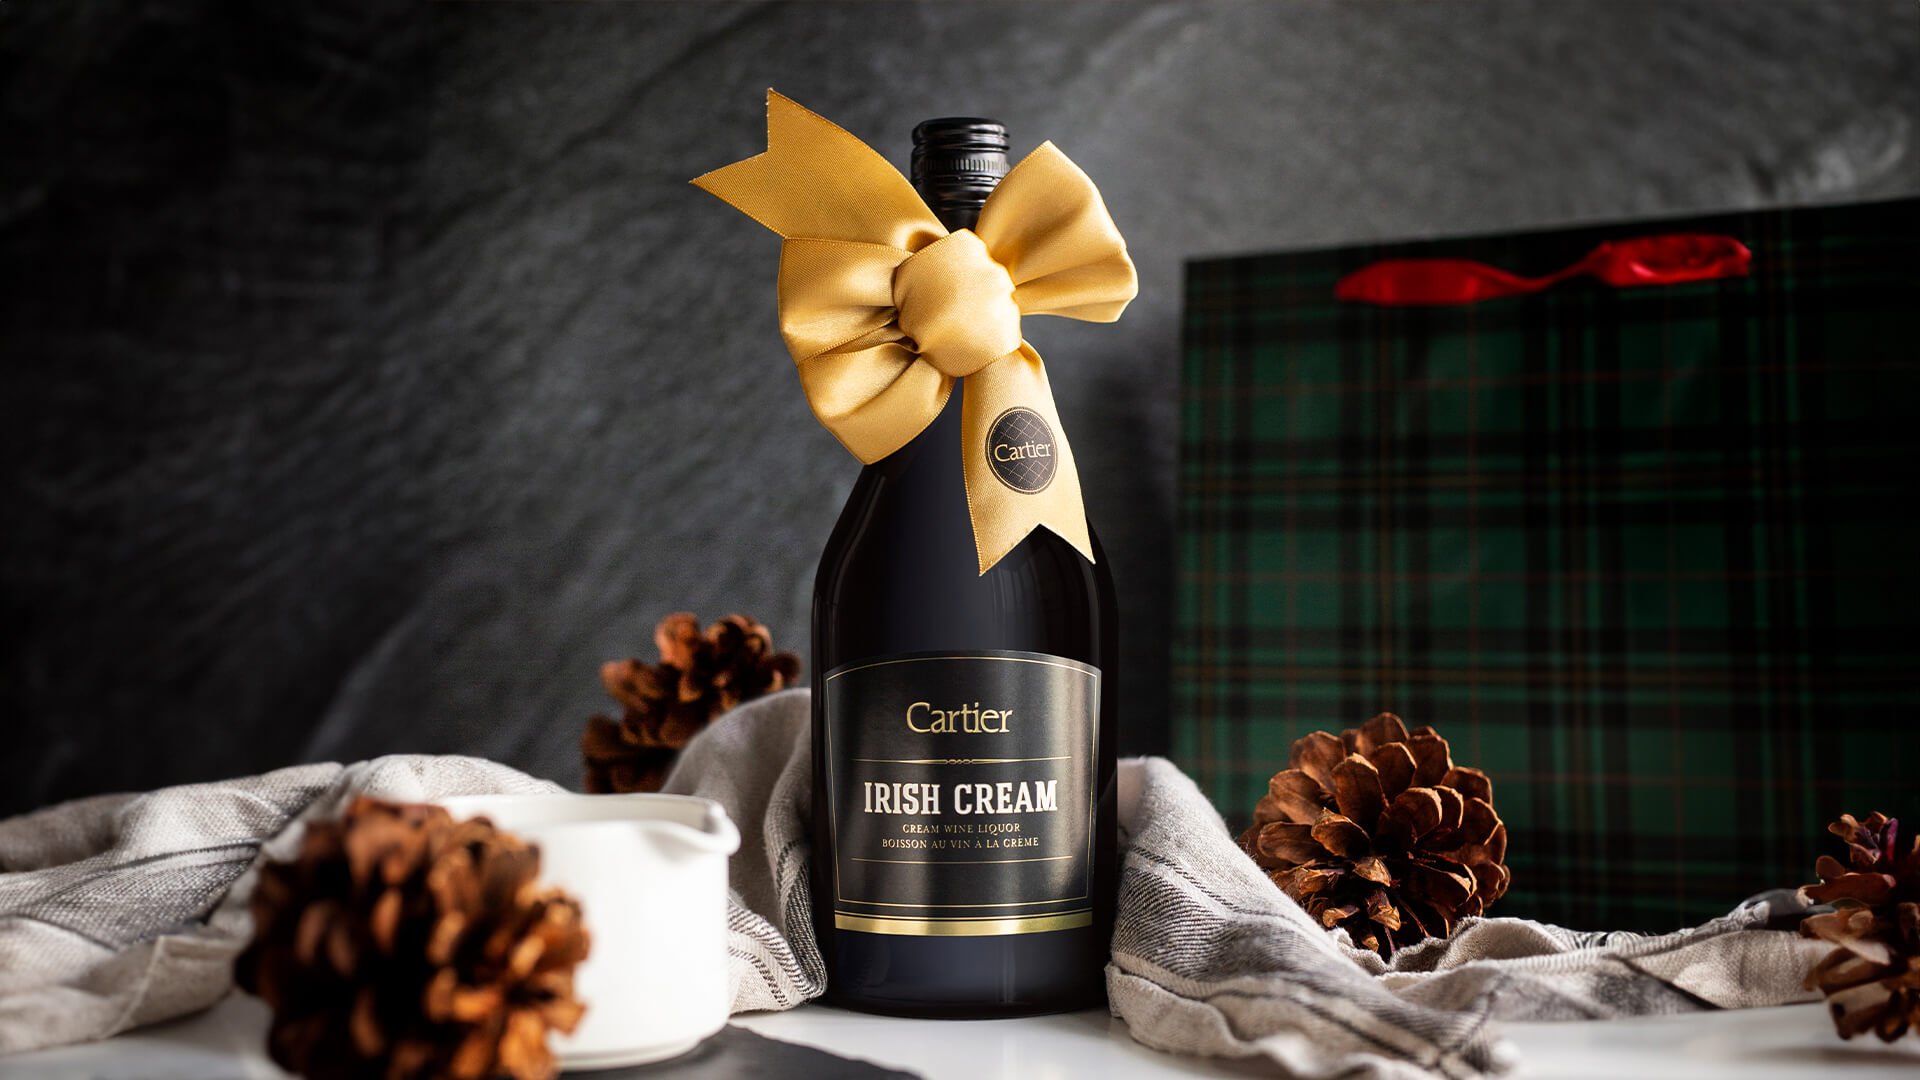 Gifted bottle of Cartier Irish Cream Wine Liquor.